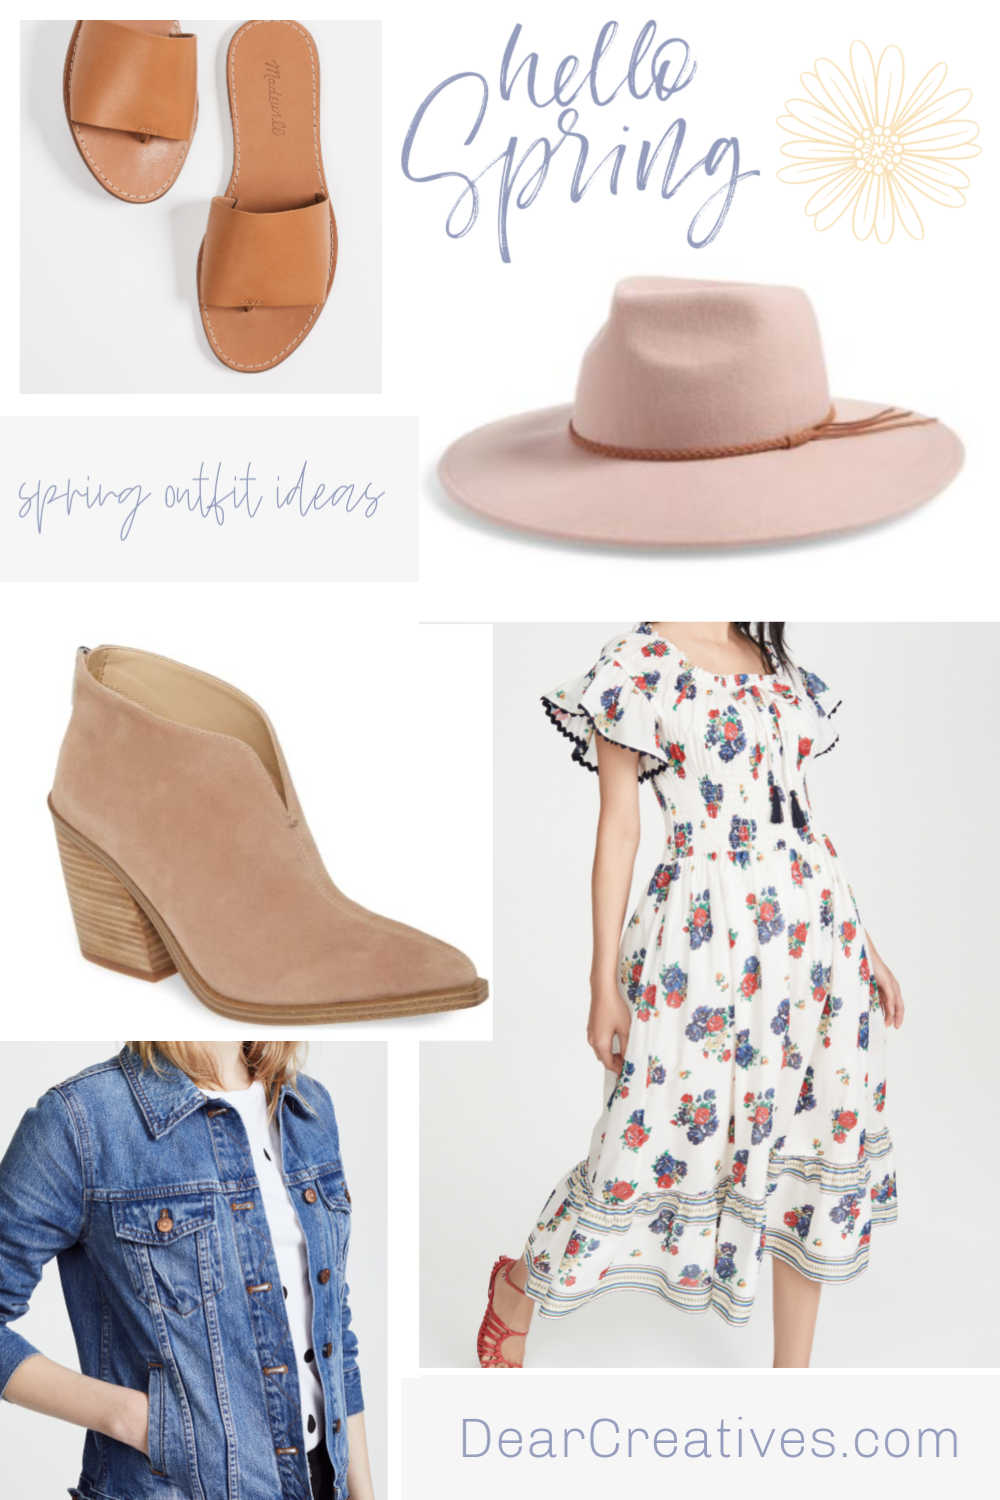 Spring Outfit Ideas - Spring dress, wool hat, sandals, booties, denim jacket - DearCreatives.com